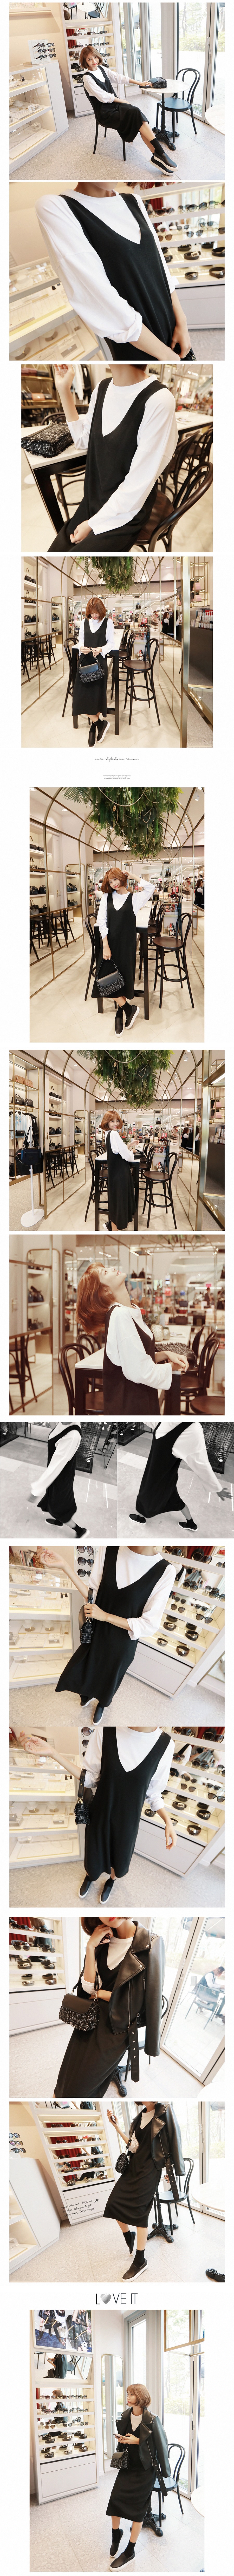 KOREA Deep V-Neck Ribbed Knit Dress+Long Sleeve T-Shirt 2 pieces #Black+White One Size(S-M) [Free Shipping]